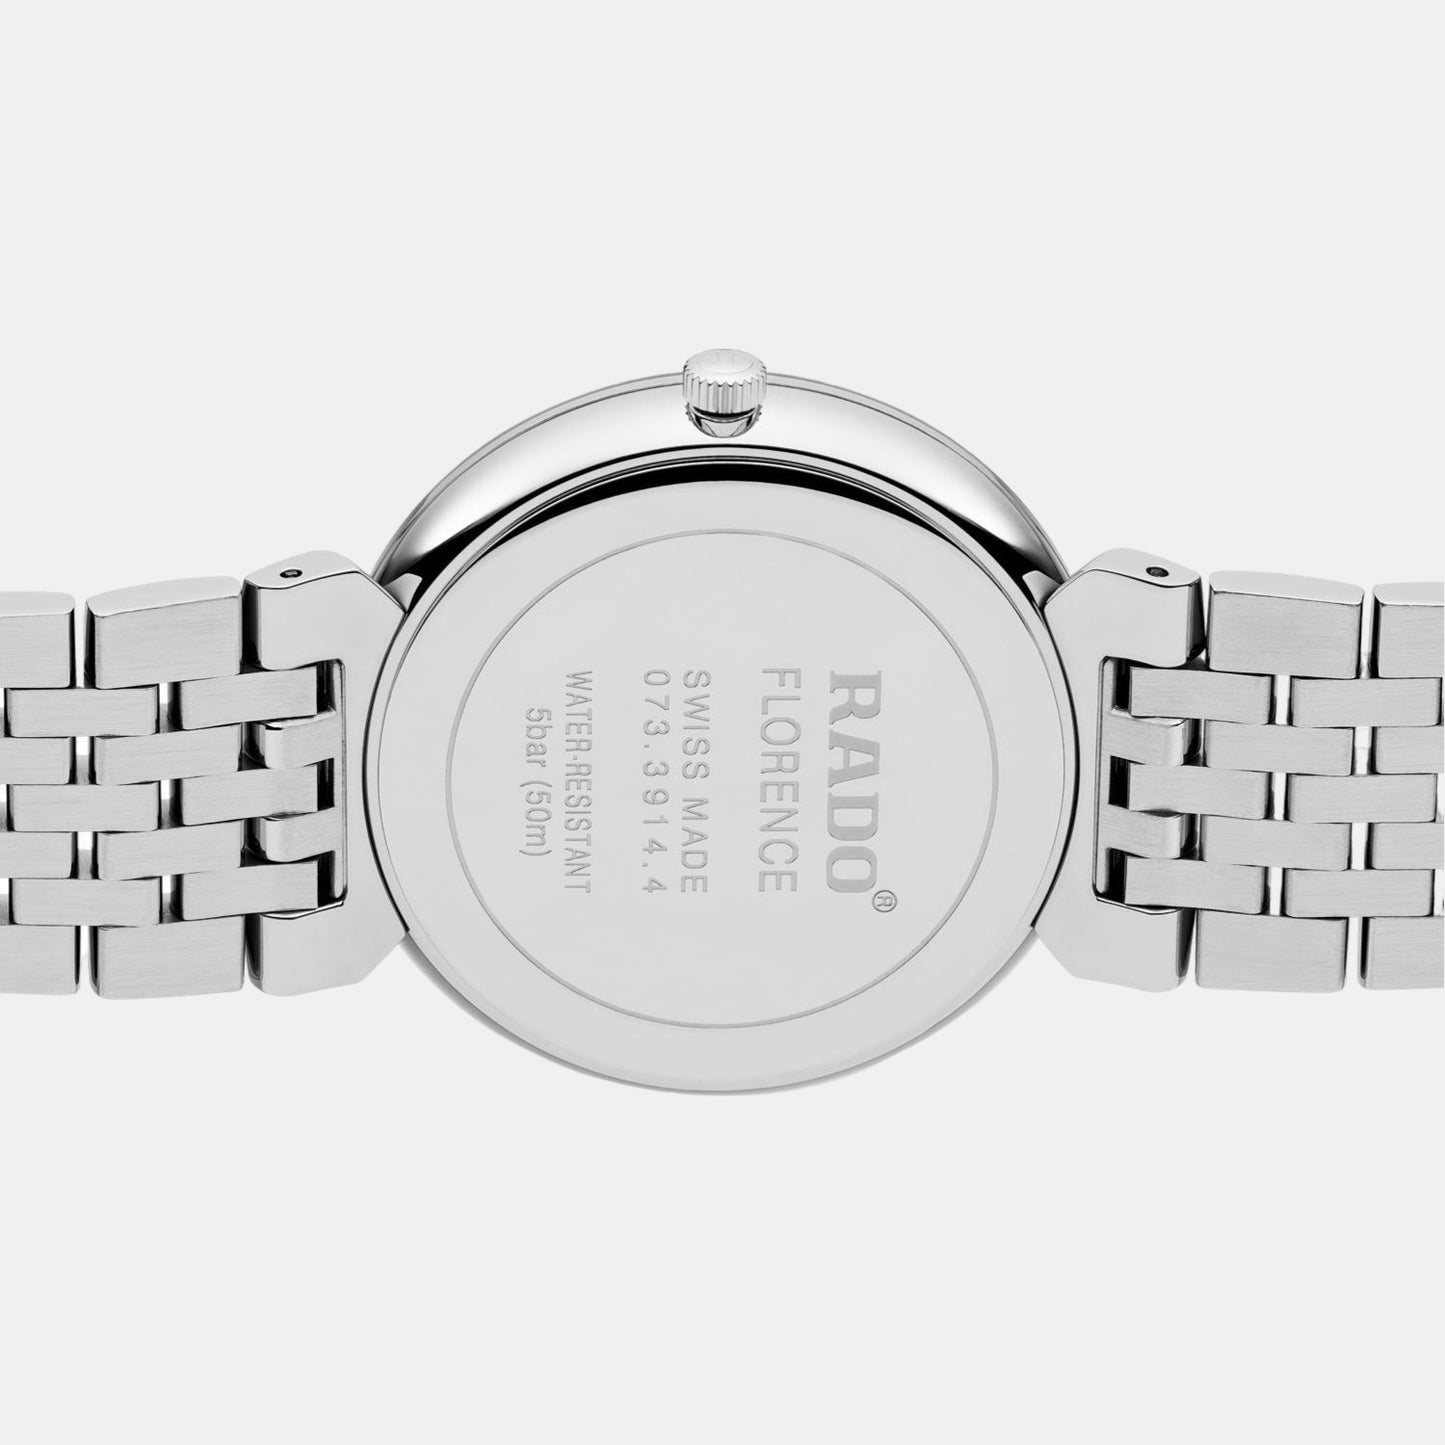 rado-stainless-steel-white-analog-unisex-watch-r48912013